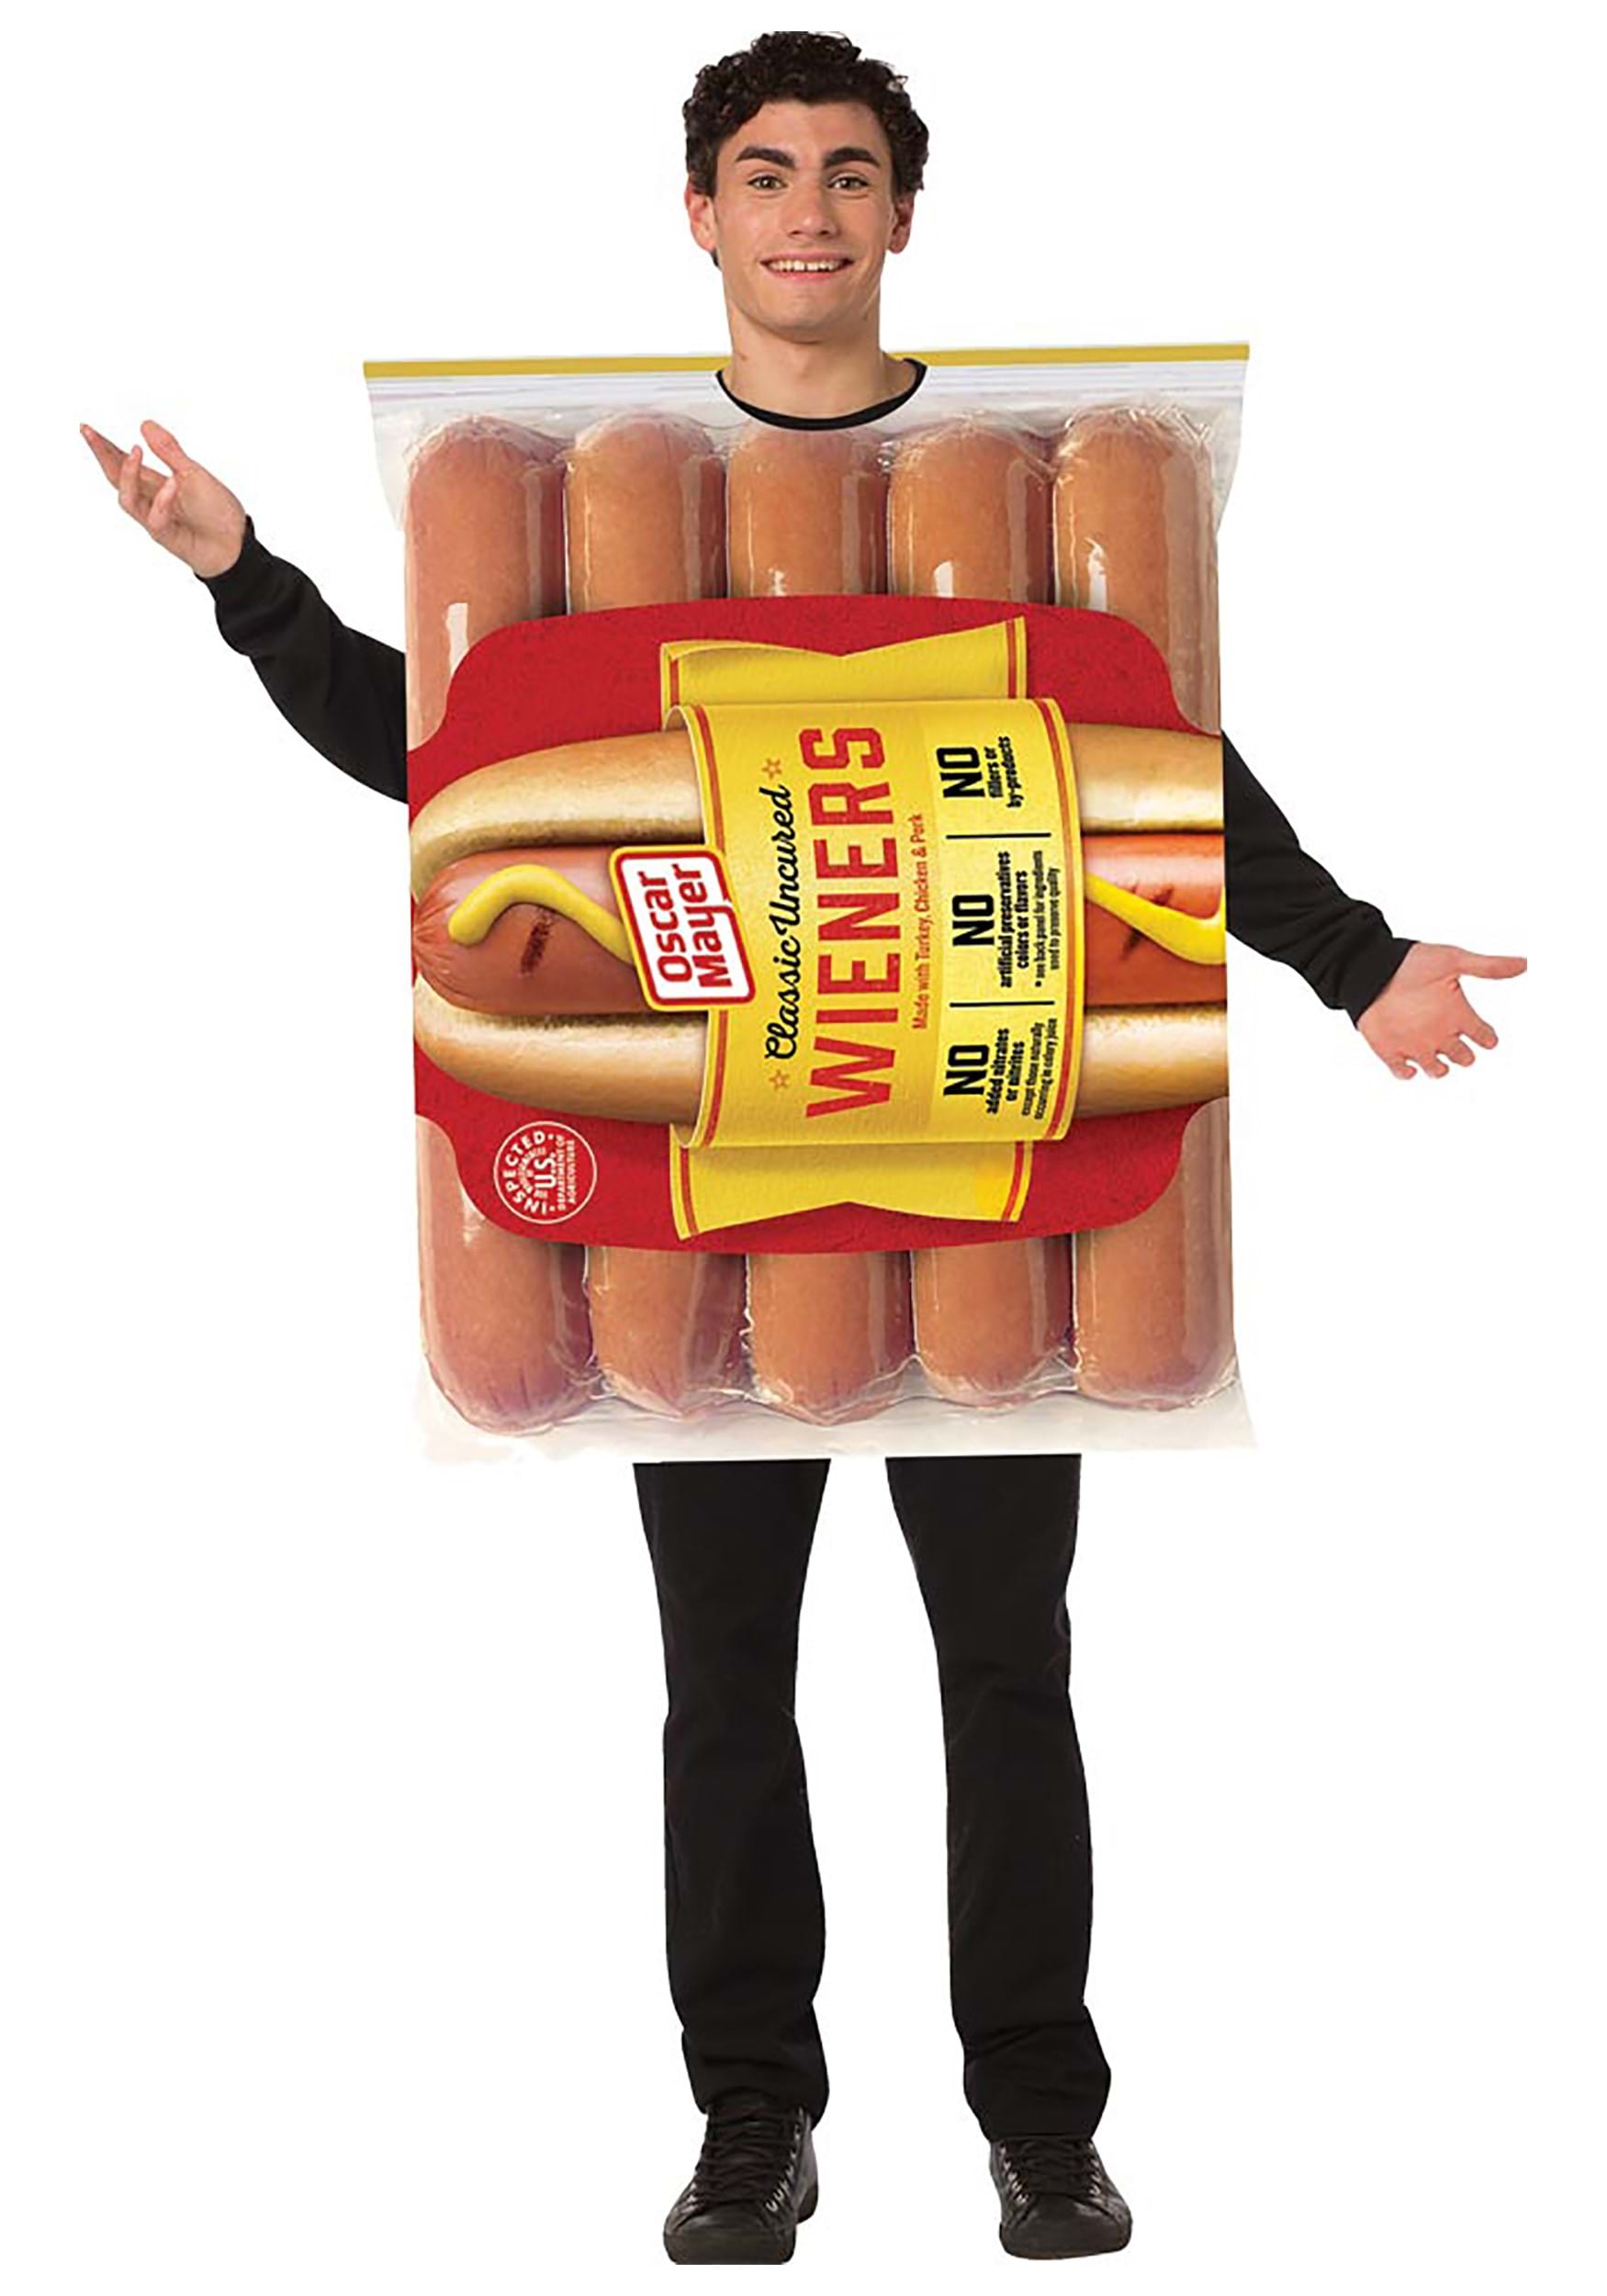 clergyman livestock reckless Adult Oscar Mayer Hot Dog Package Costume